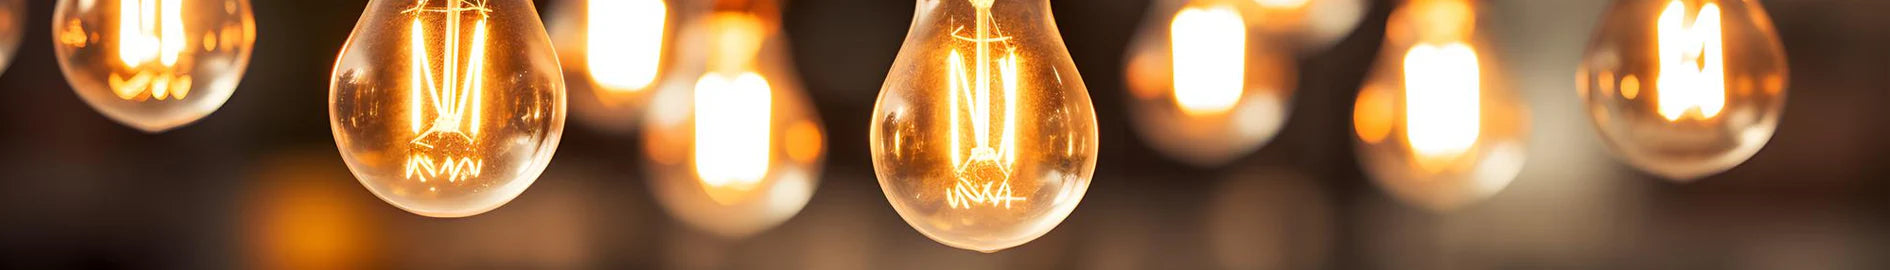 high quality light bulbs for sale online